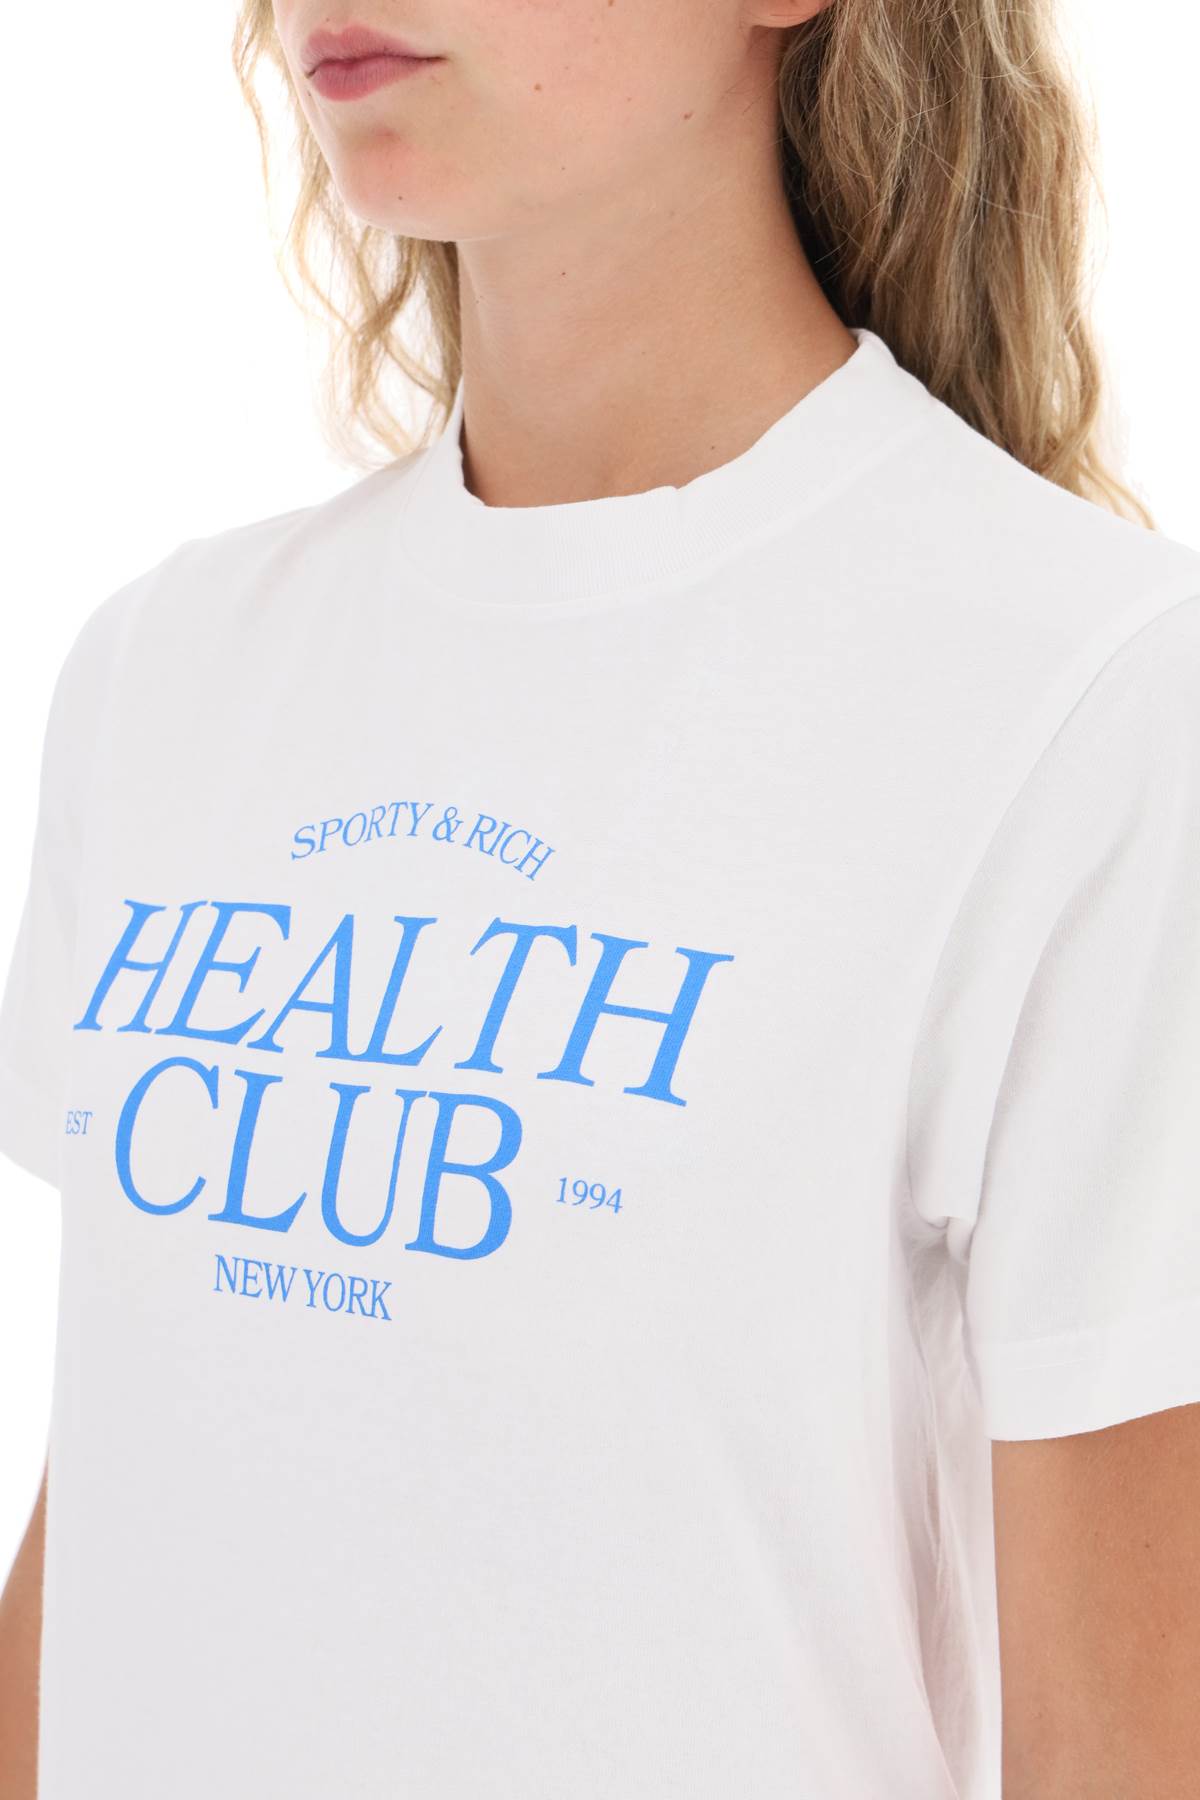 'sr health club' t-shirt-3